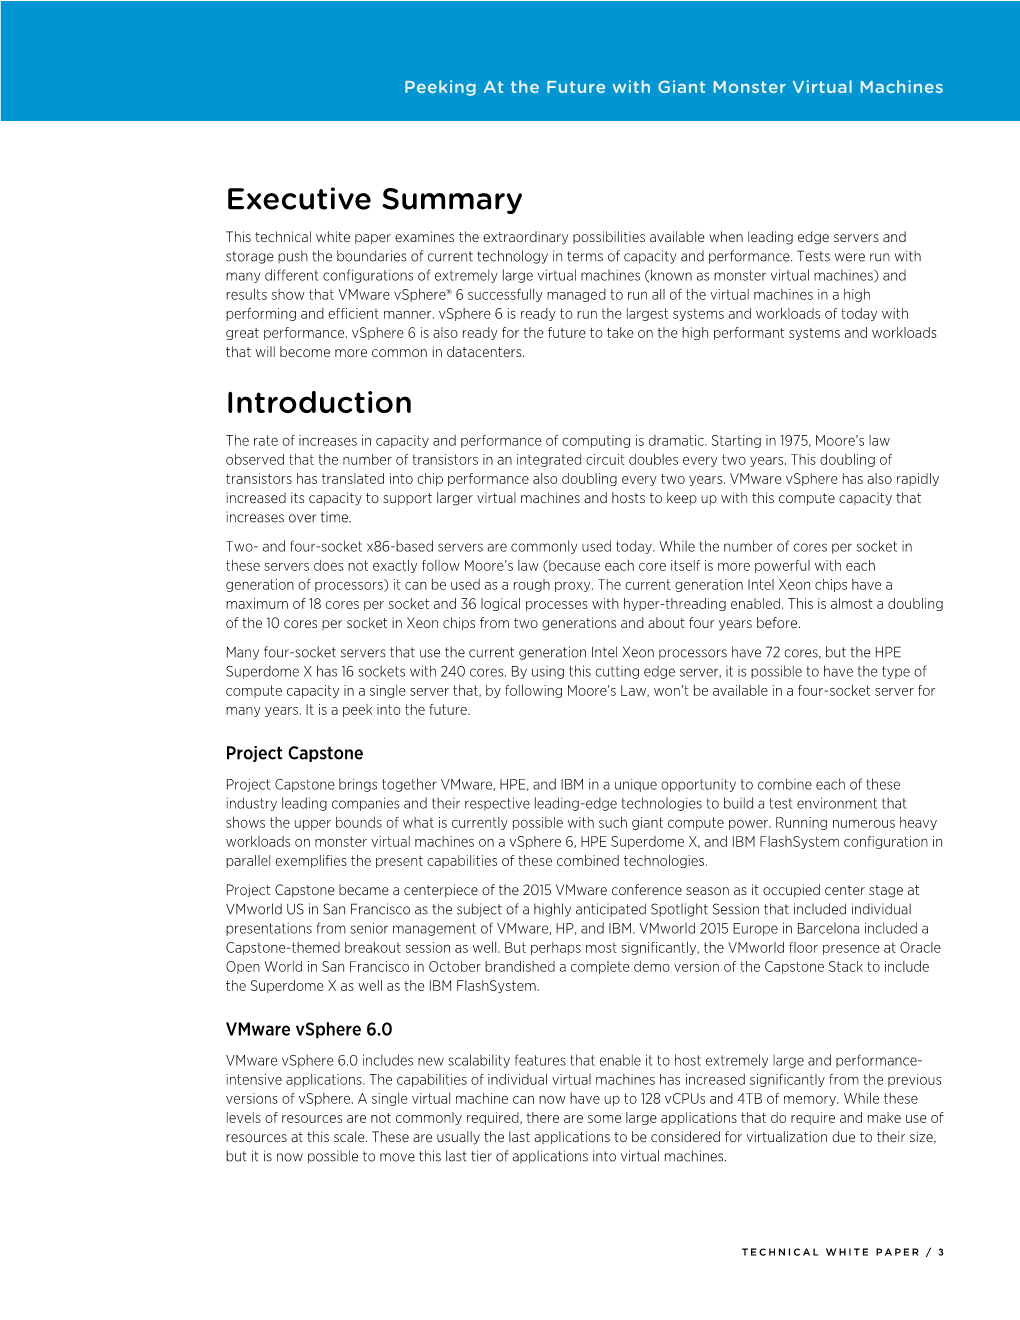 Executive Summary Introduction